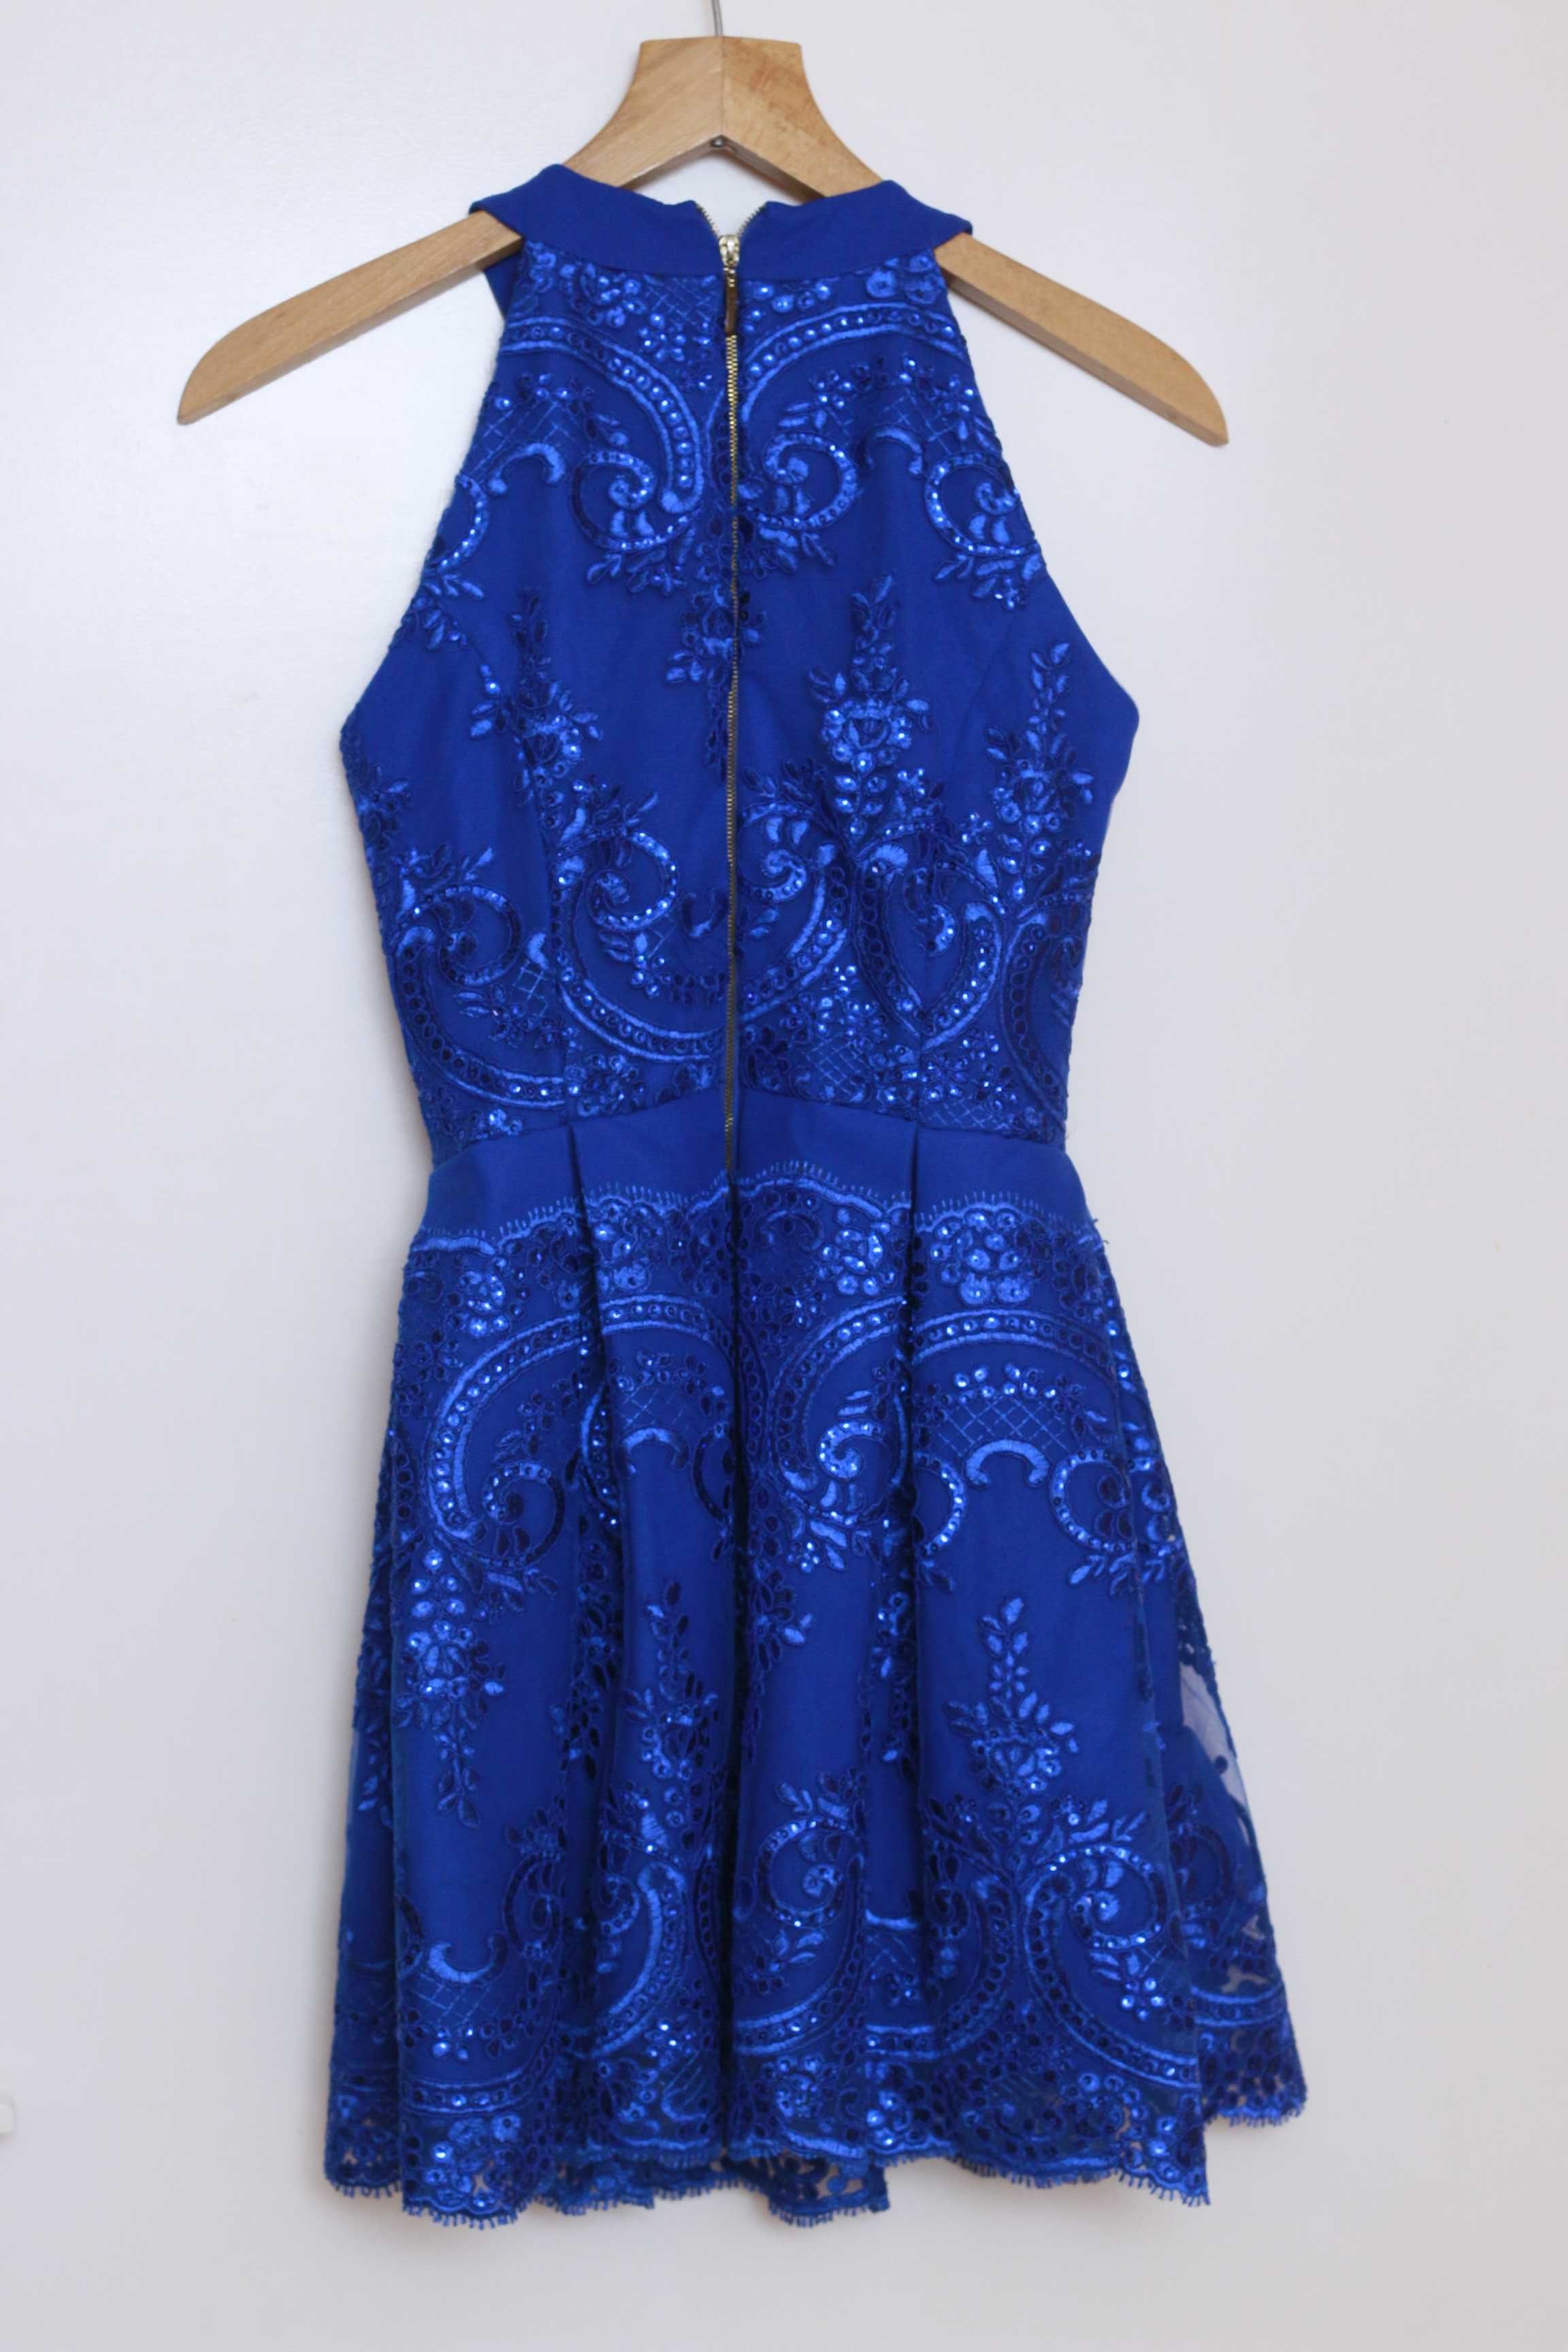 Sukienka s.Moriss błękitna szafirowa blue S 36